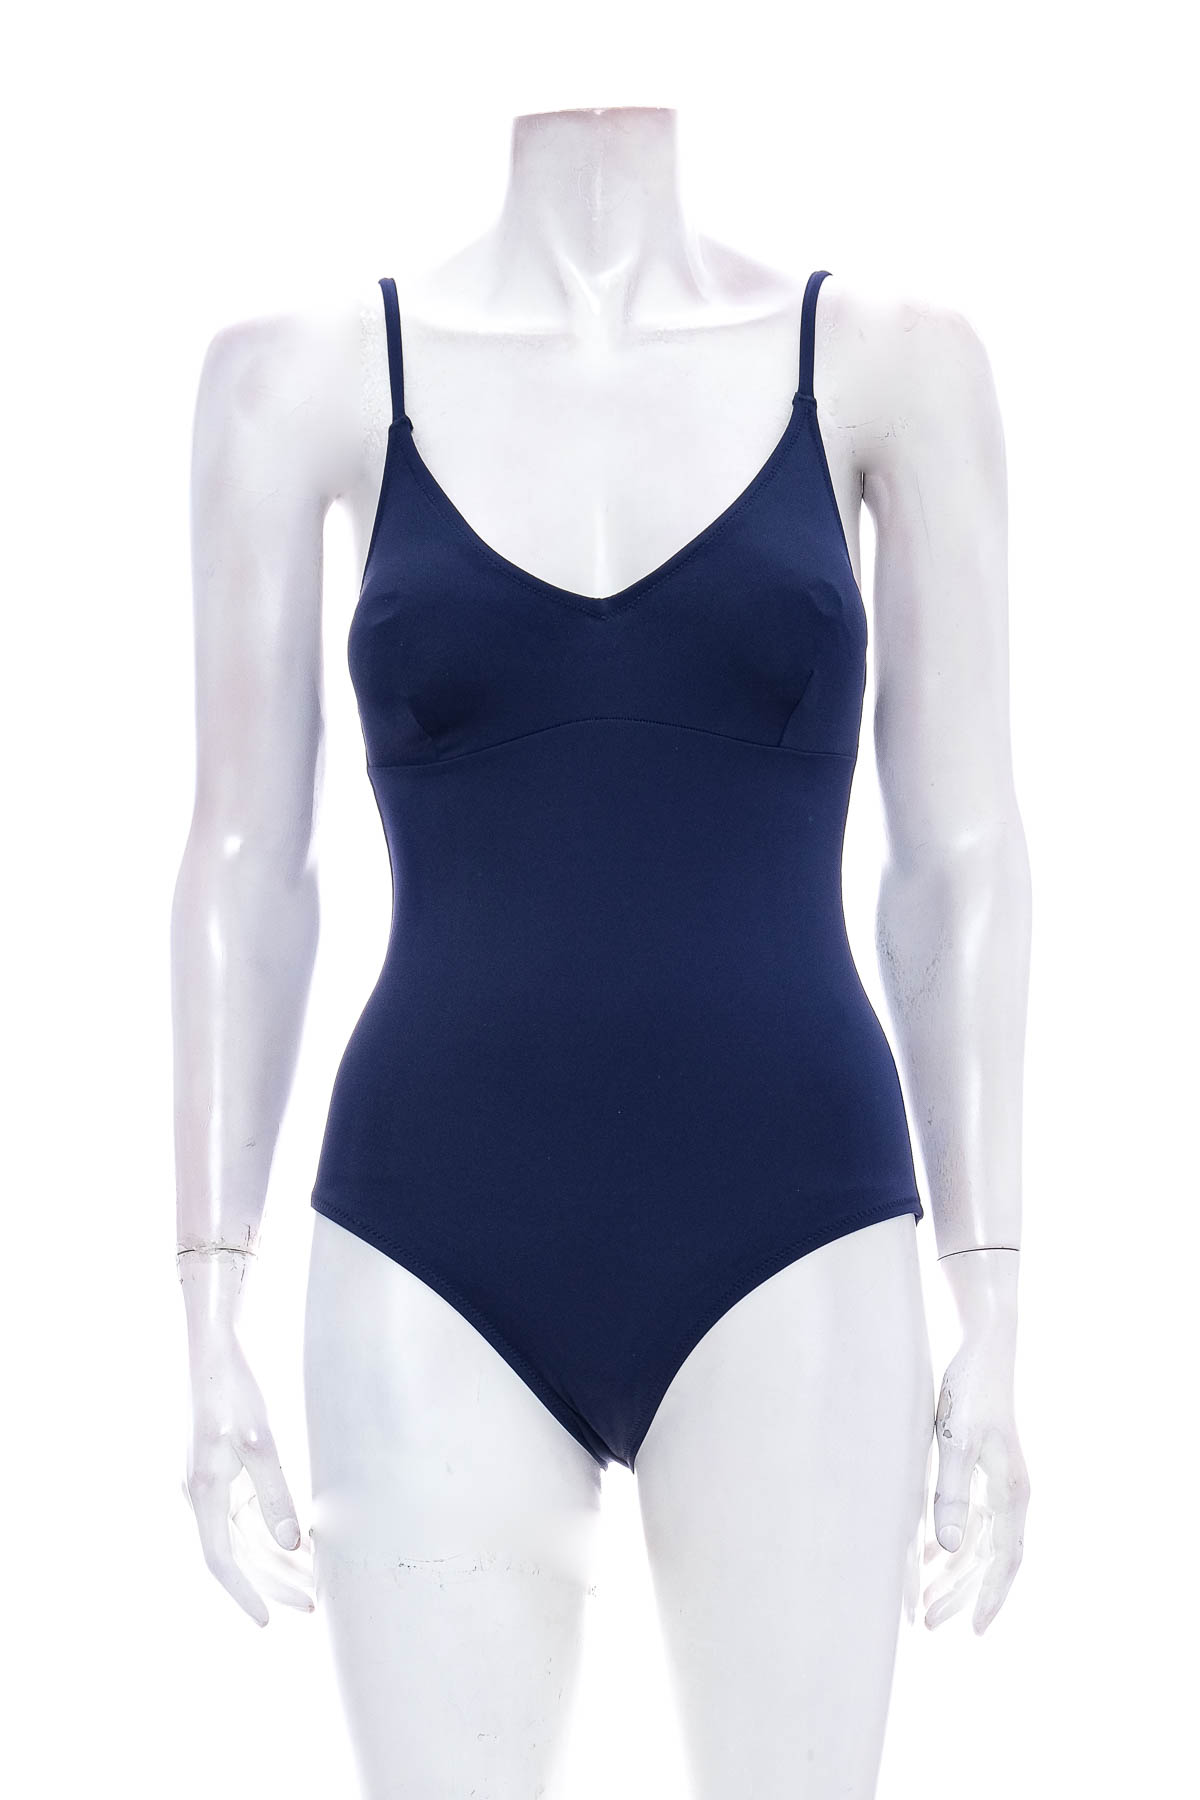 Women's swimsuit - ANNA FIELD - 0